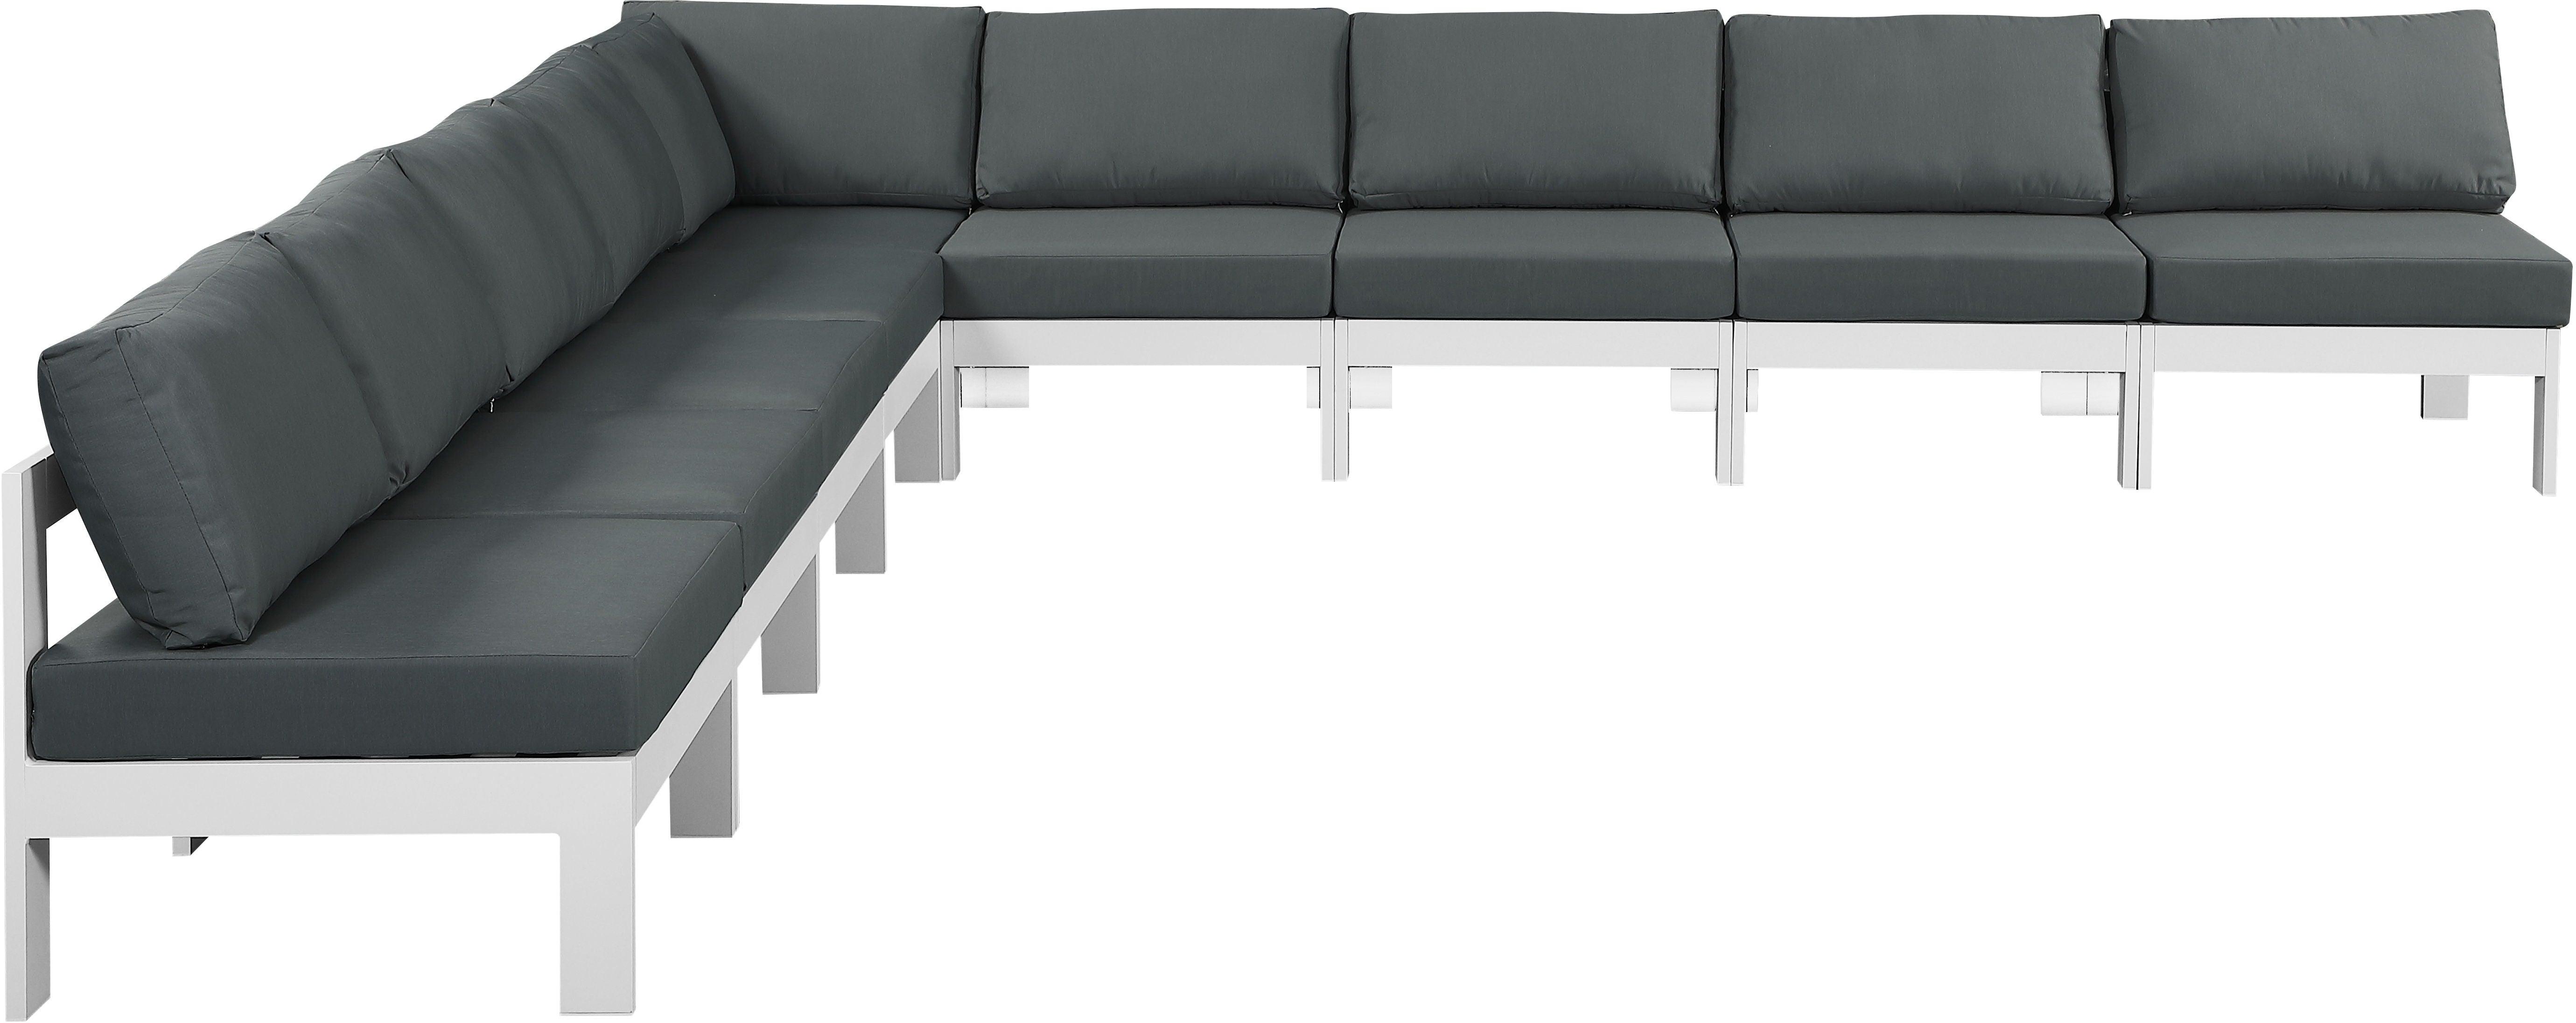 Meridian Furniture - Nizuc - Outdoor Patio Modular Sectional 9 Piece - Grey - Fabric - 5th Avenue Furniture